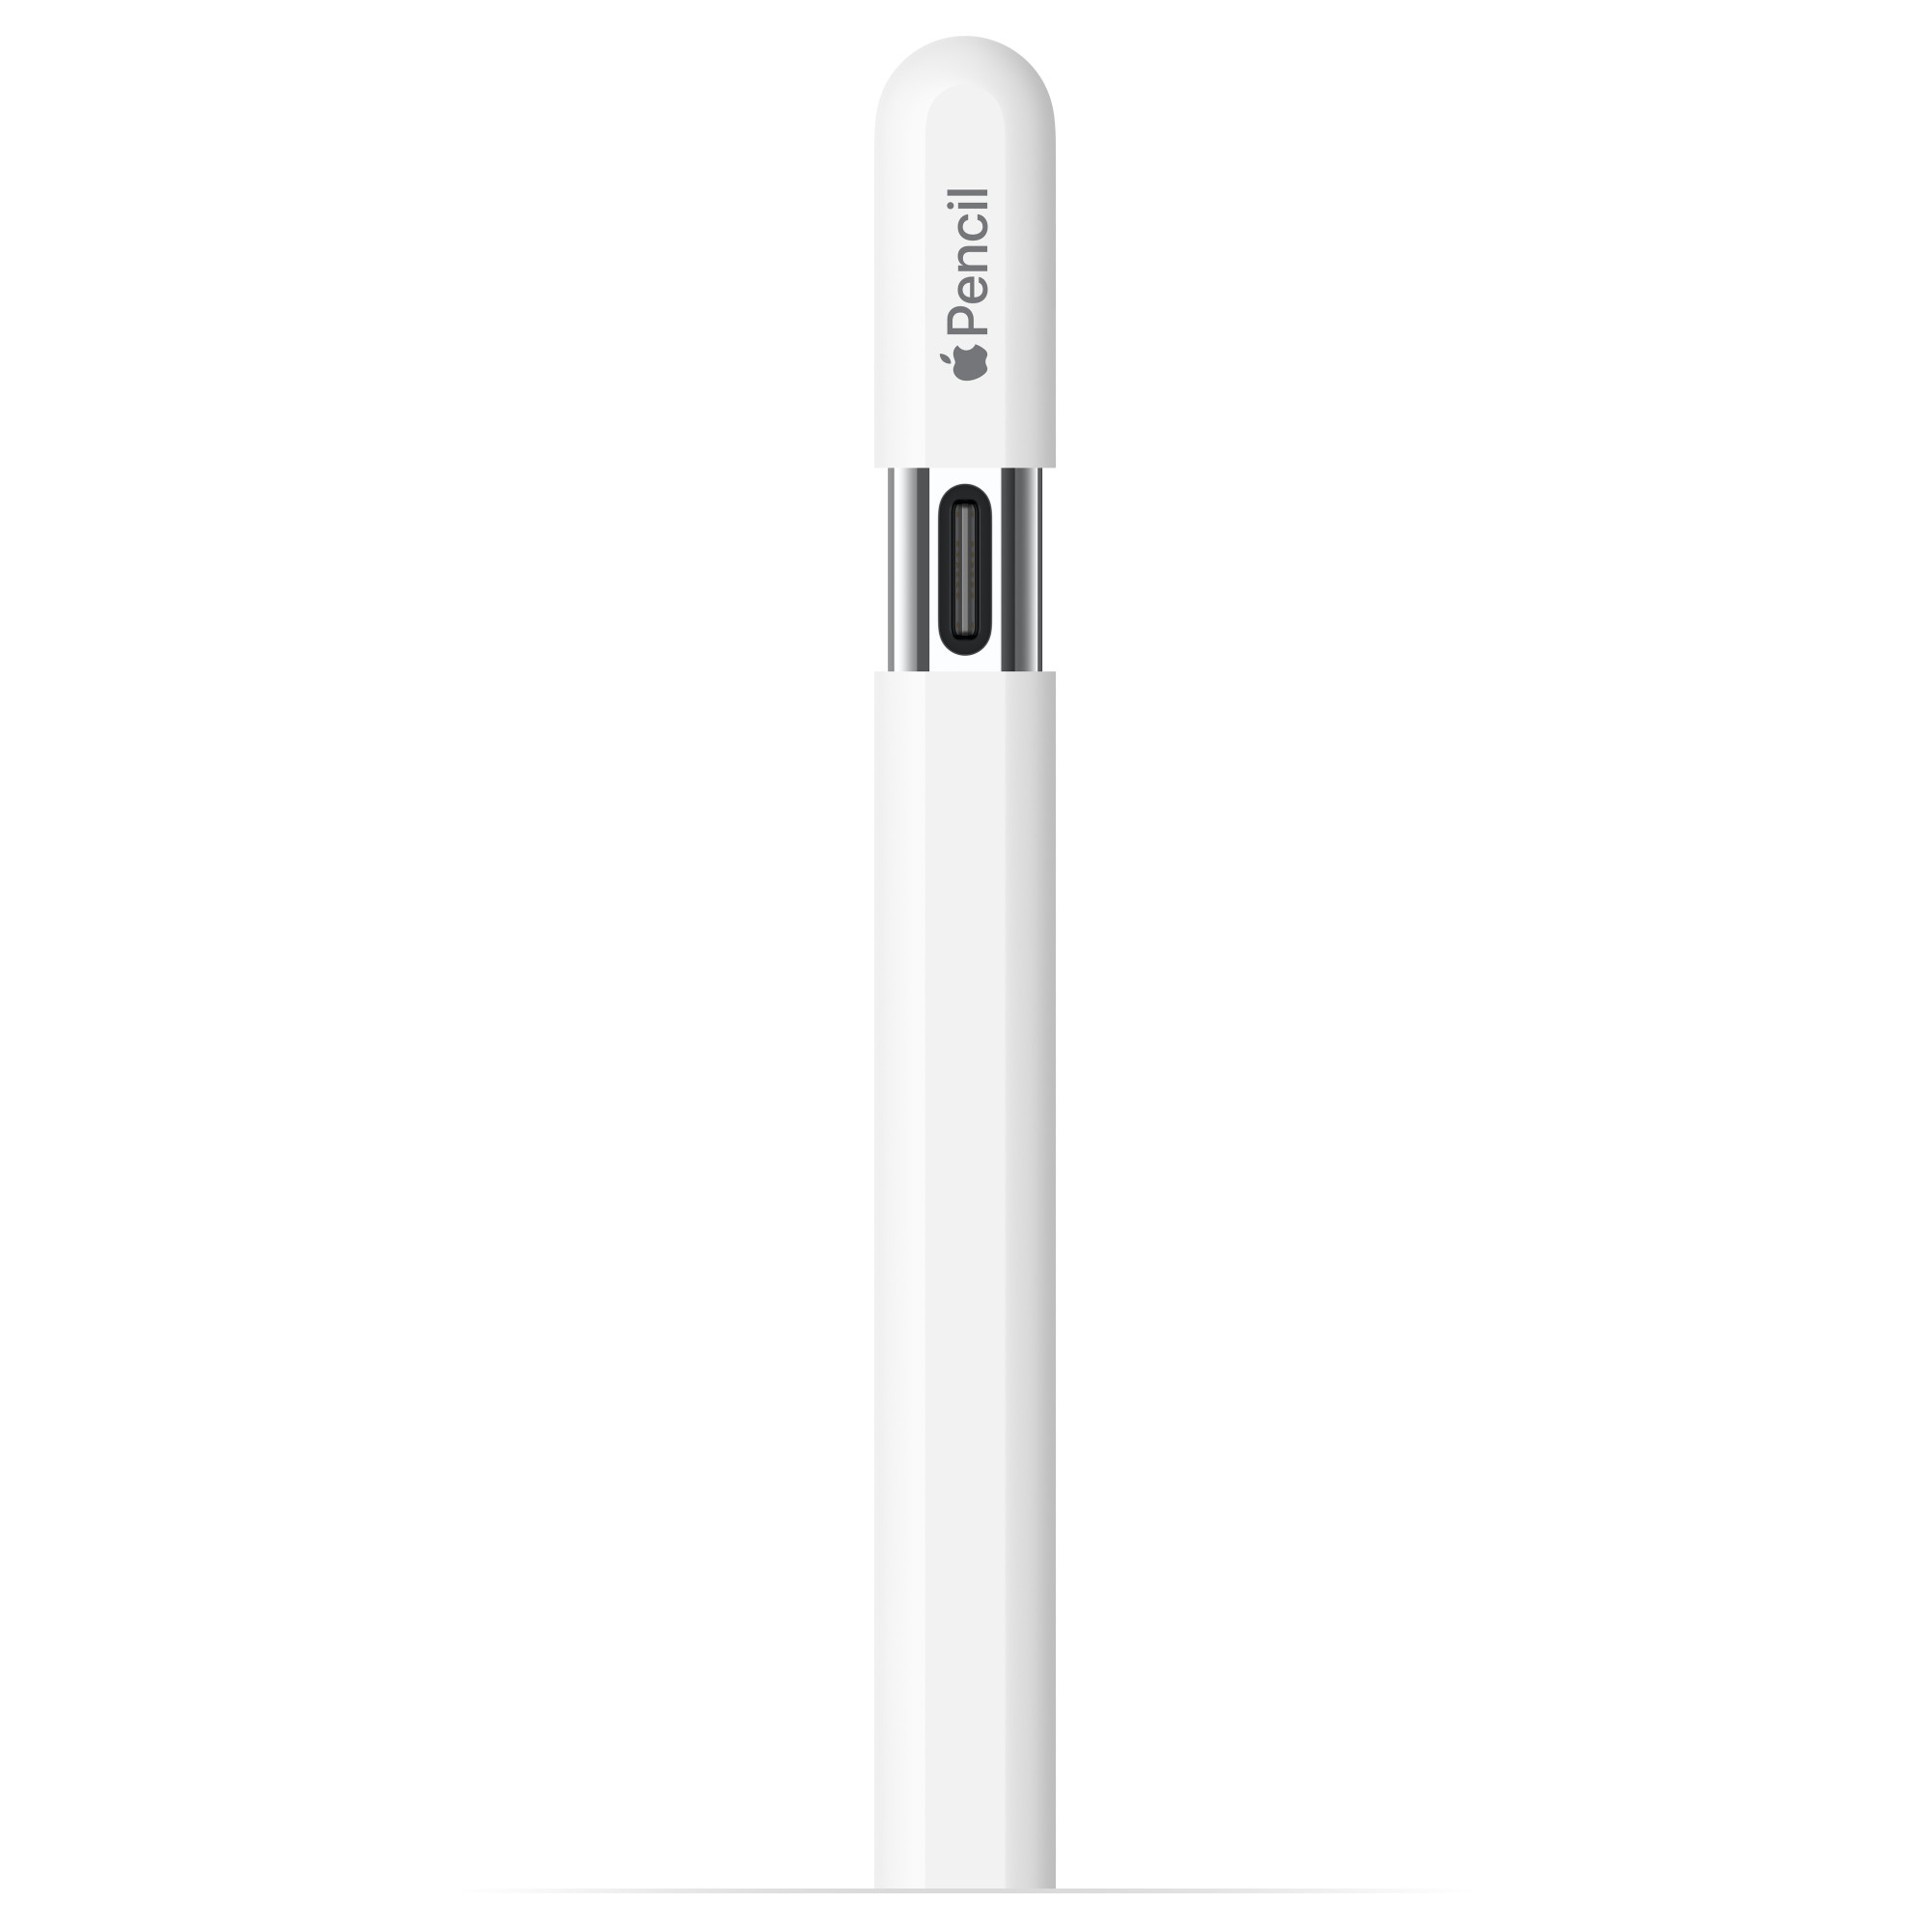 Apple presenta la nuova Apple Pencil economica